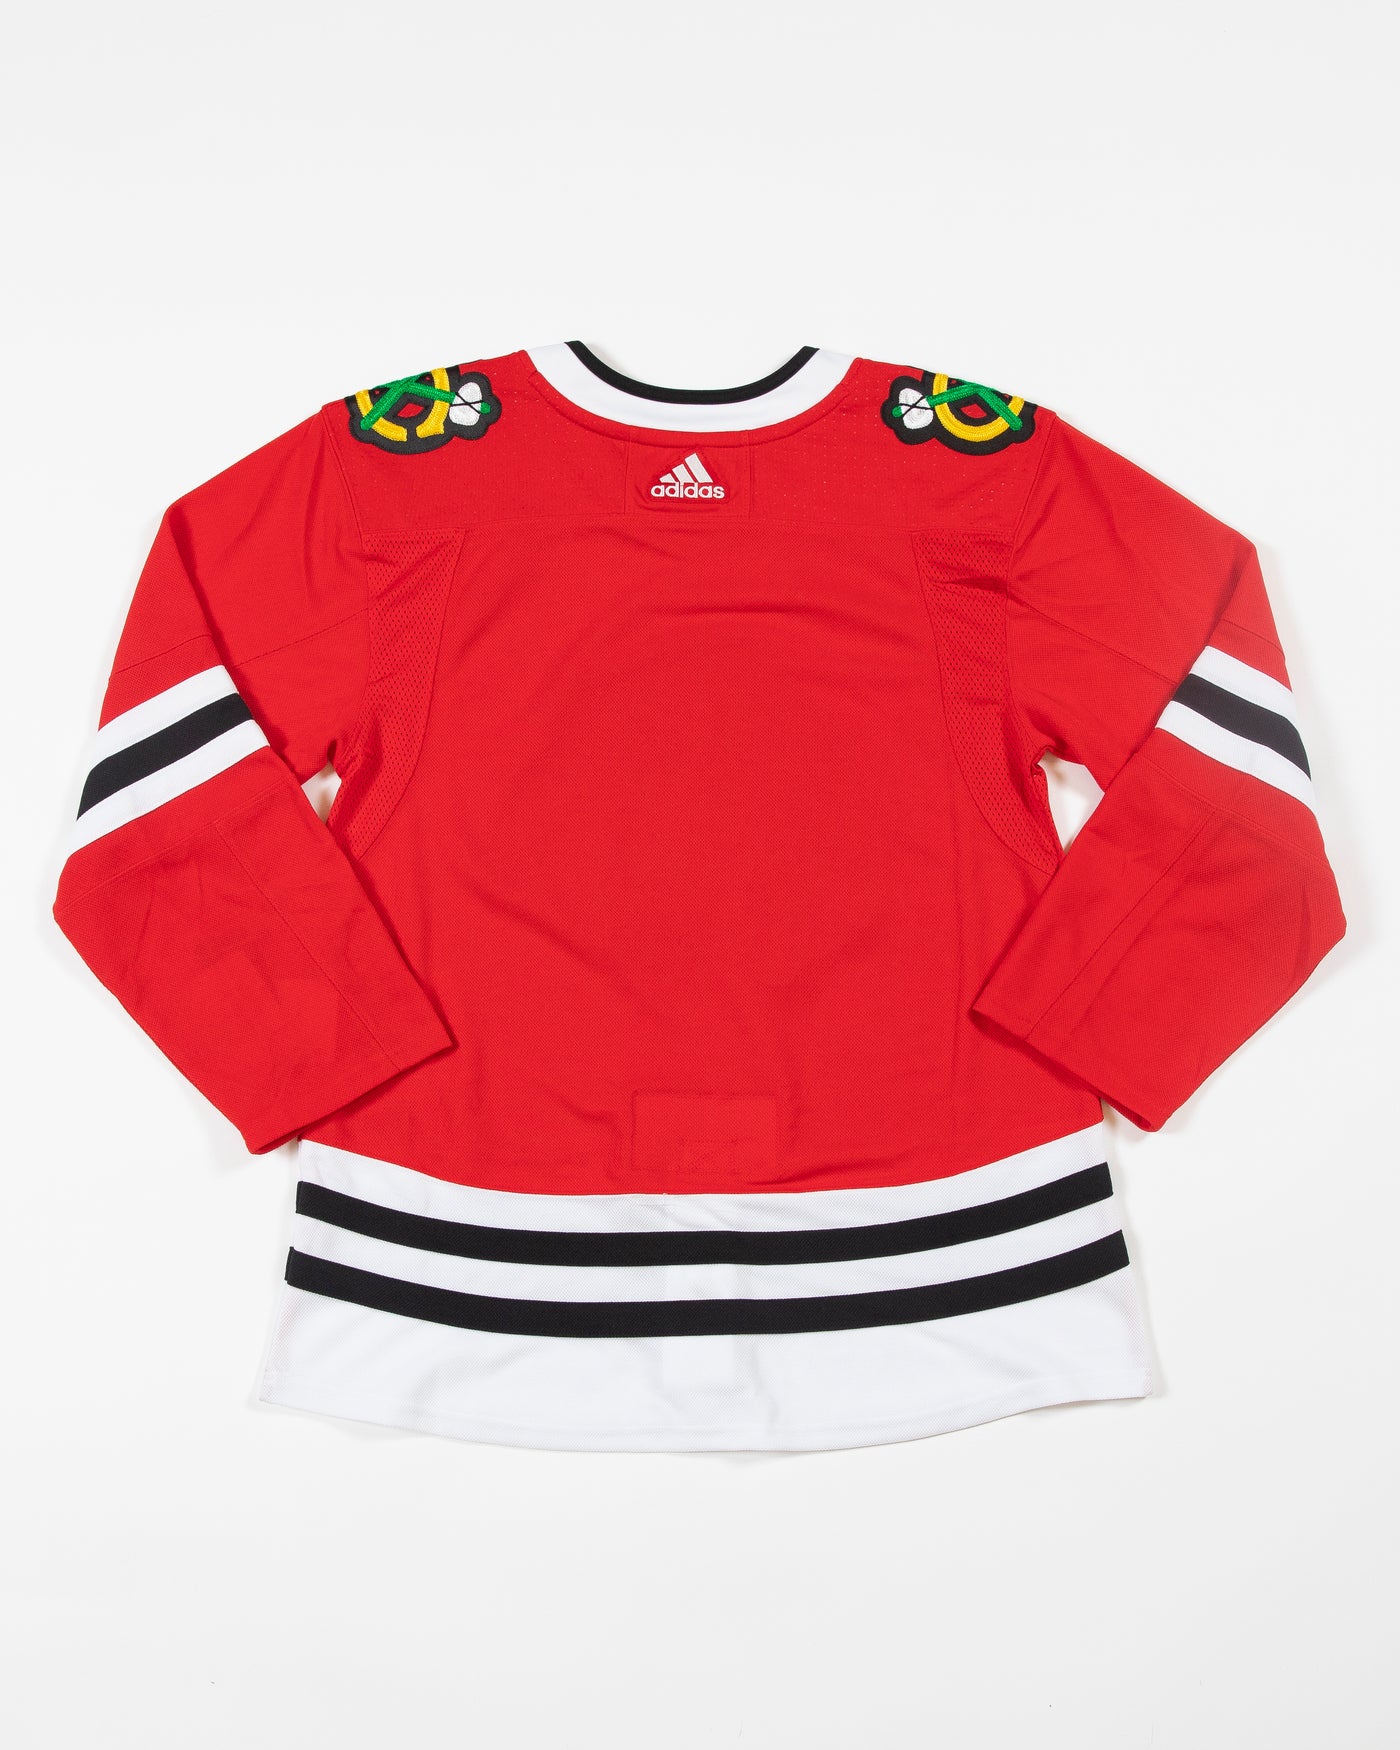 Chicago Blackhawks Adidas Primegreen Authentic Home NHL Hockey Jersey - M